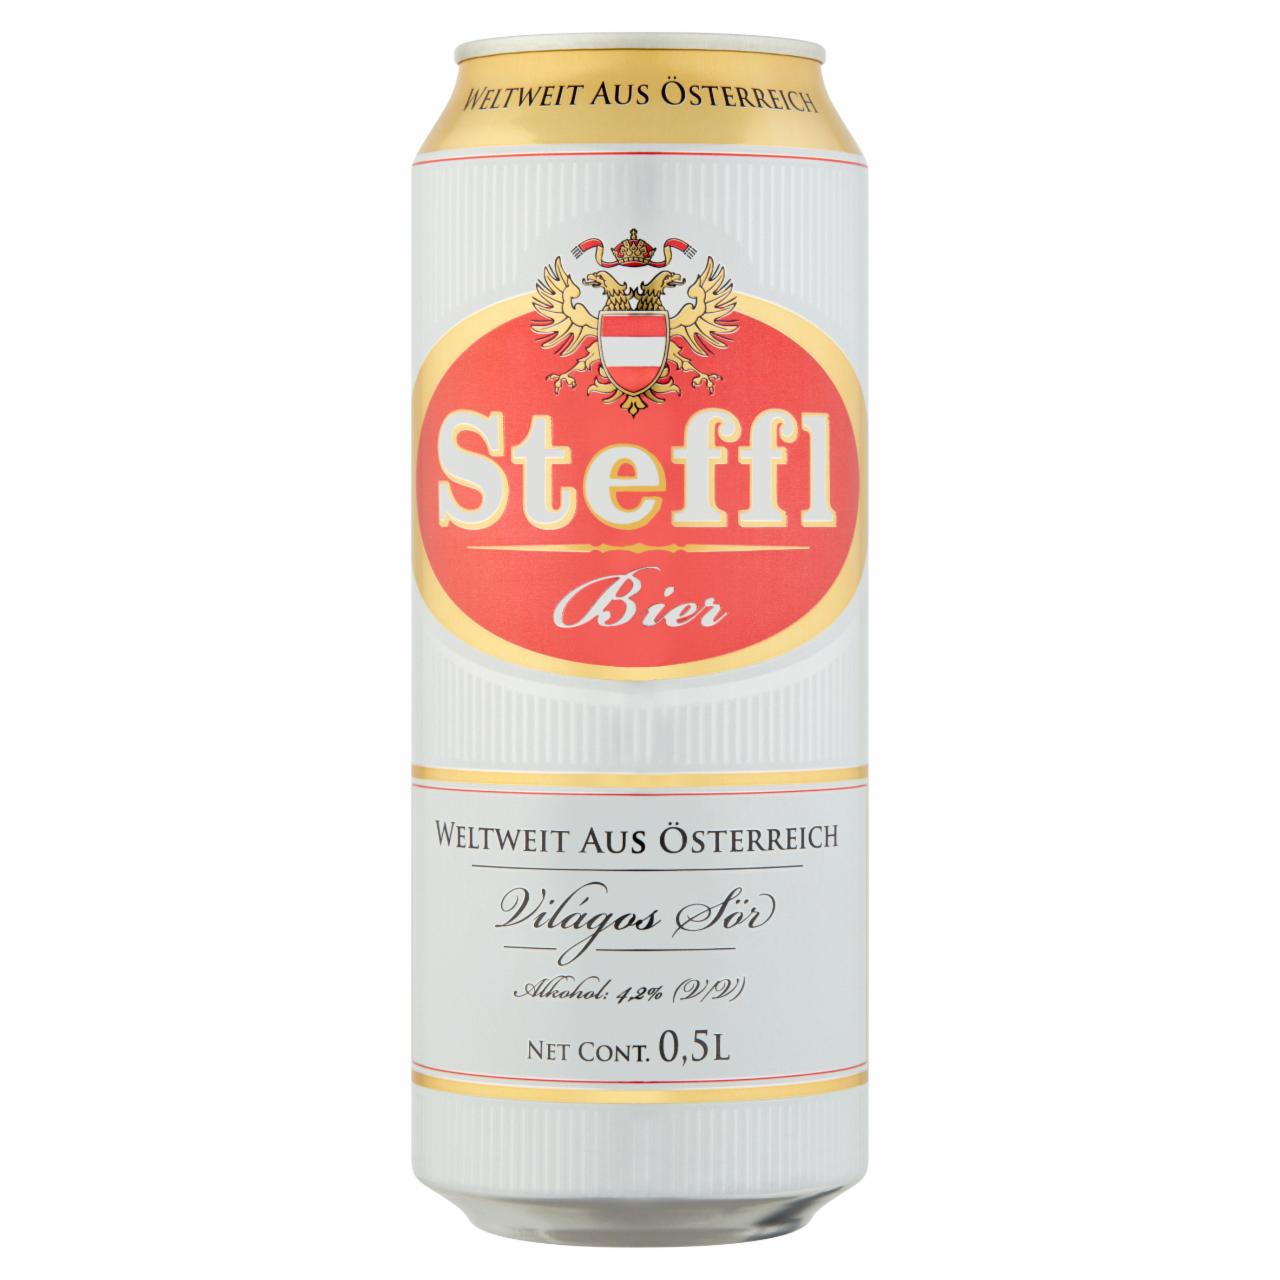 Képek - Steffl világos sör 4,2% 0,5 l doboz